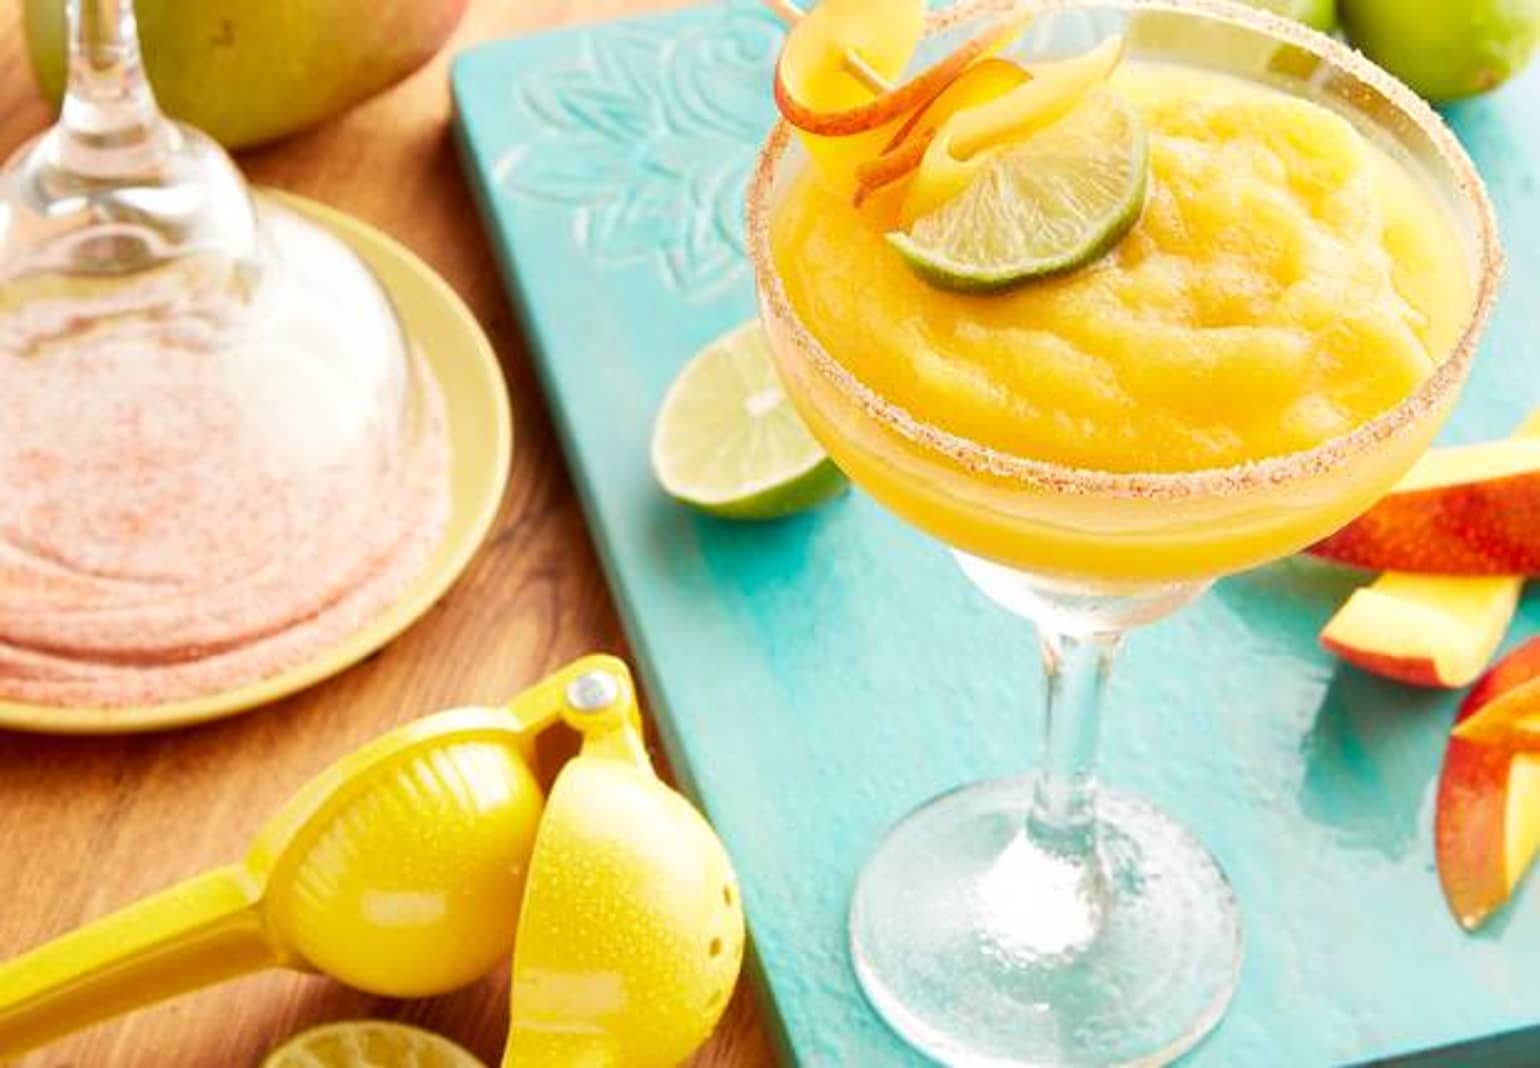 Frozen Mango Margaritas